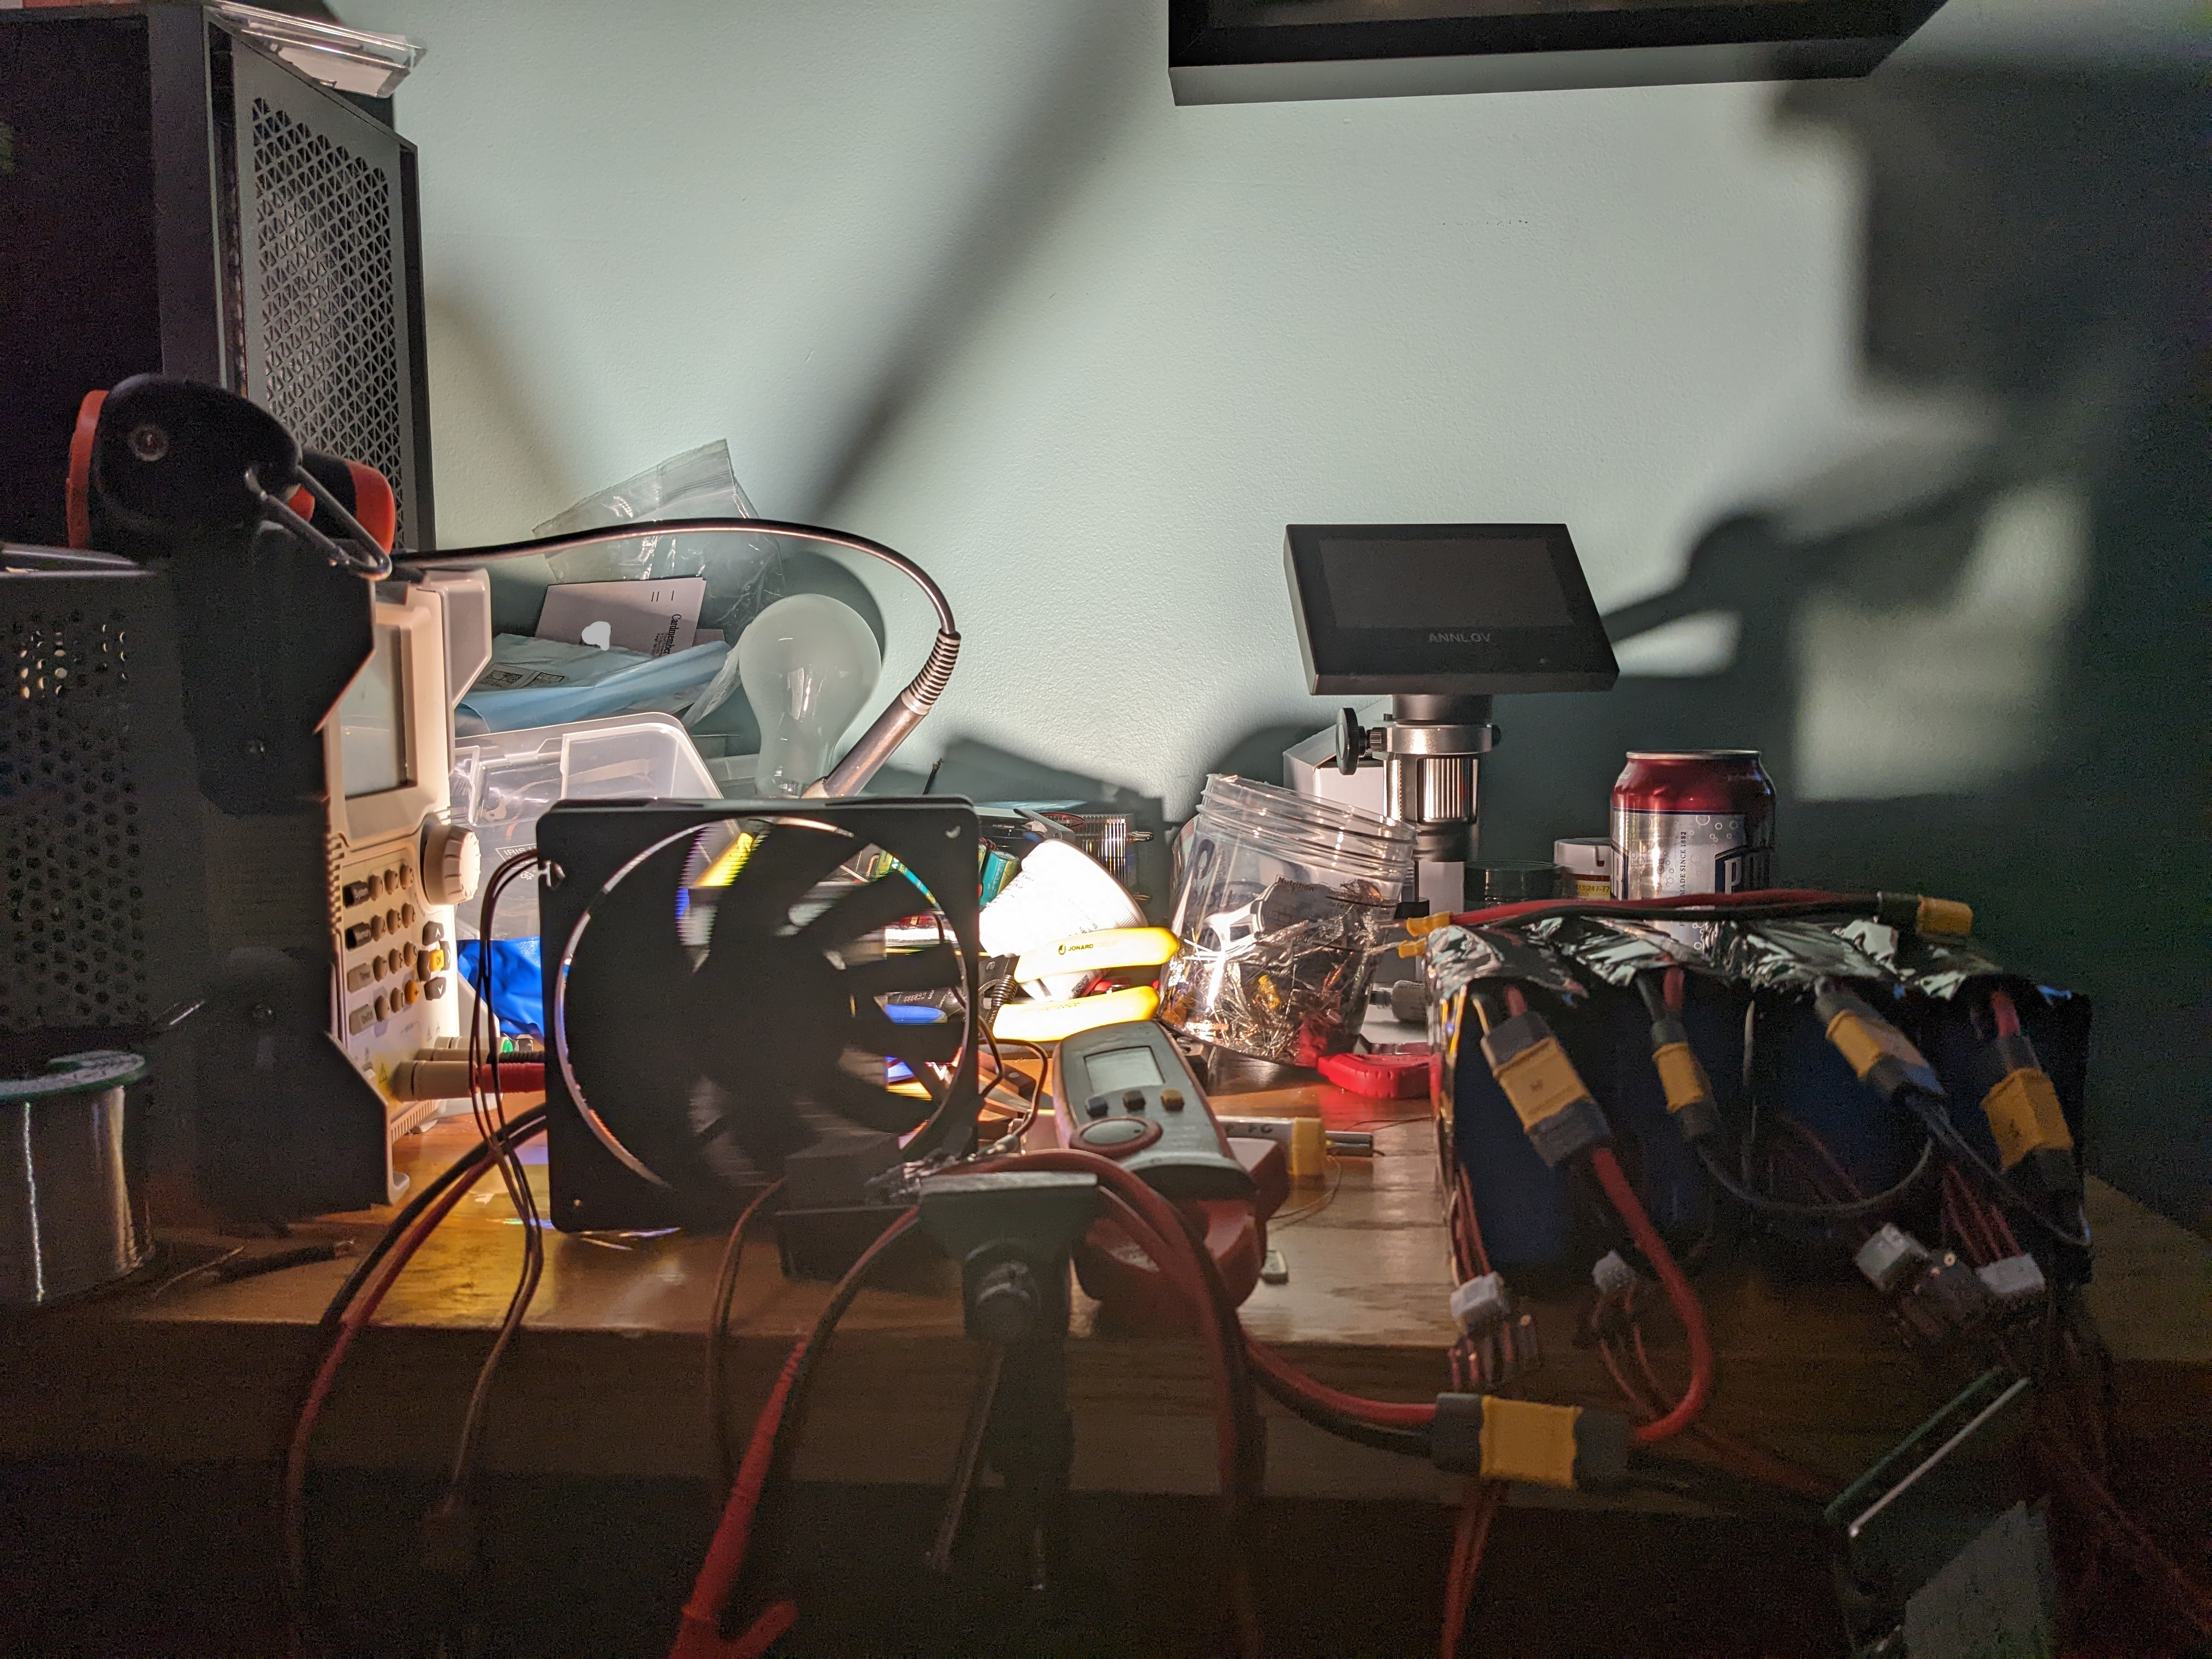 A high-power LED lights up a cluttered desk